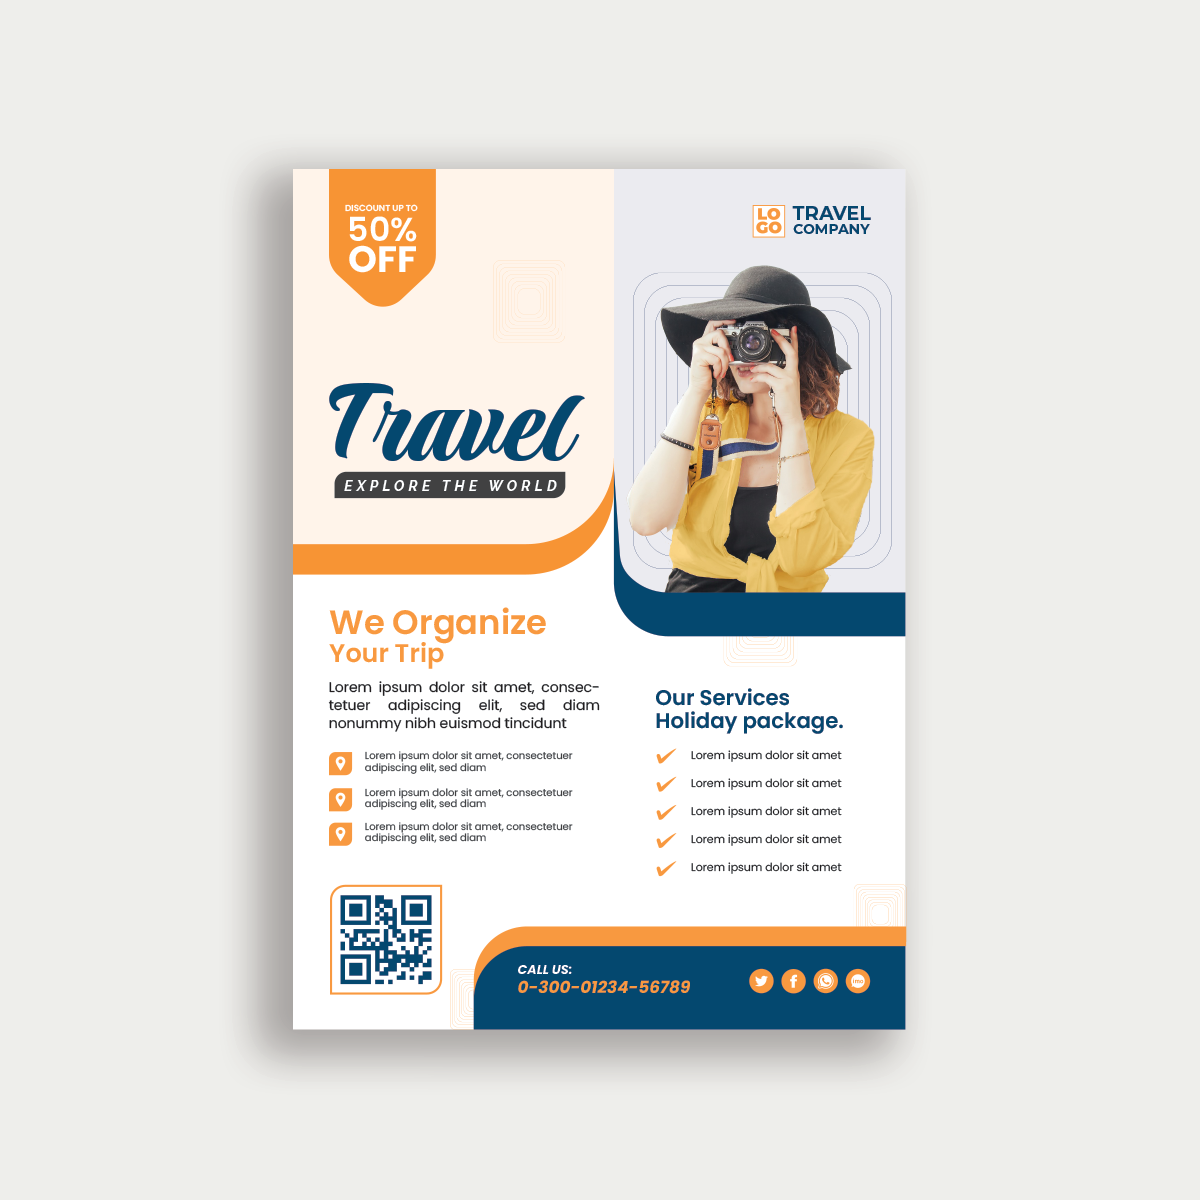 Travel sale flyer template - MasterBundles